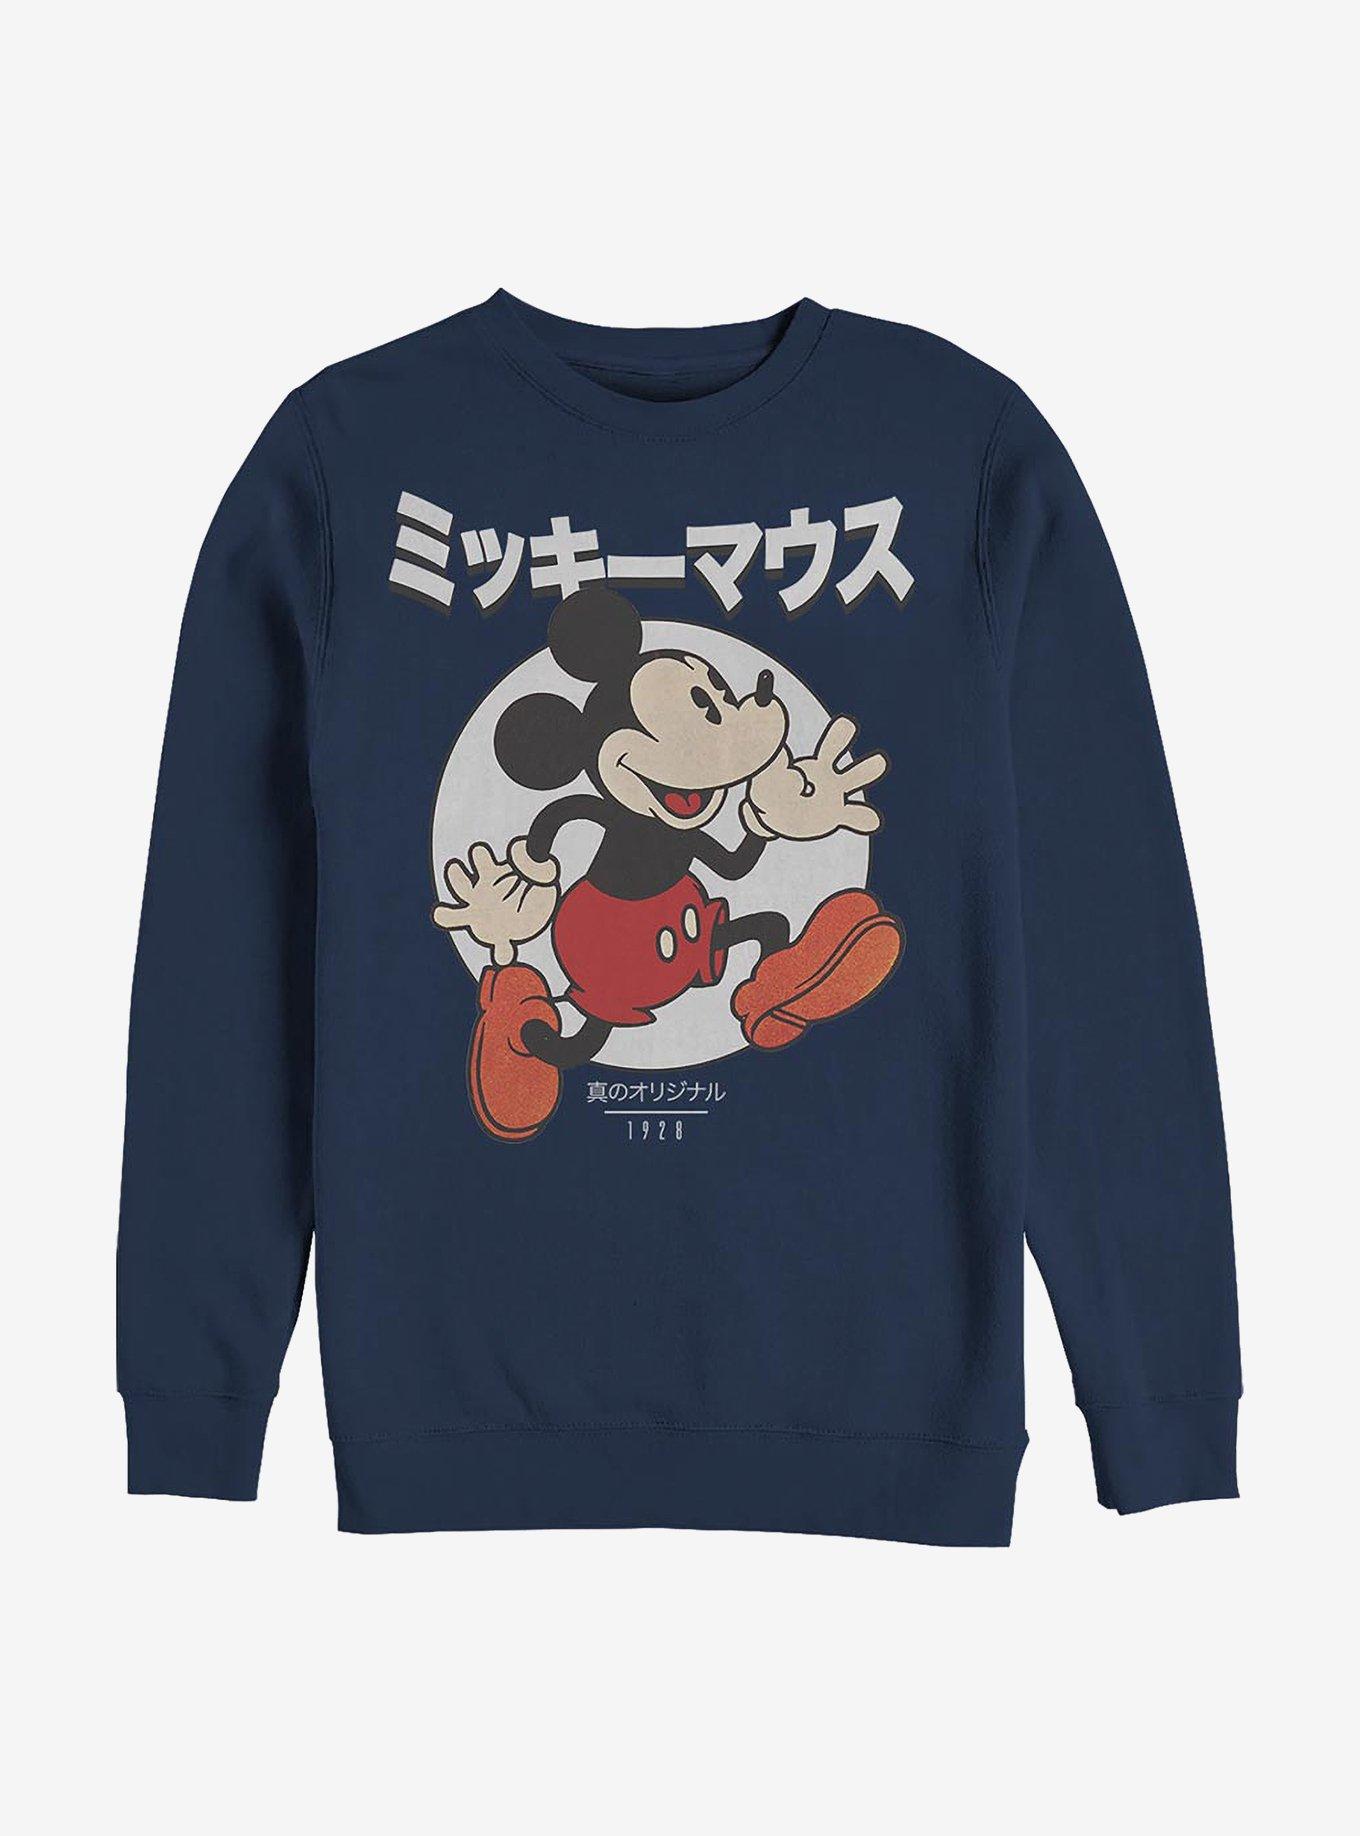 Disney Mickey Mouse Japanese Text Comic Crew Sweatshirt - BLUE